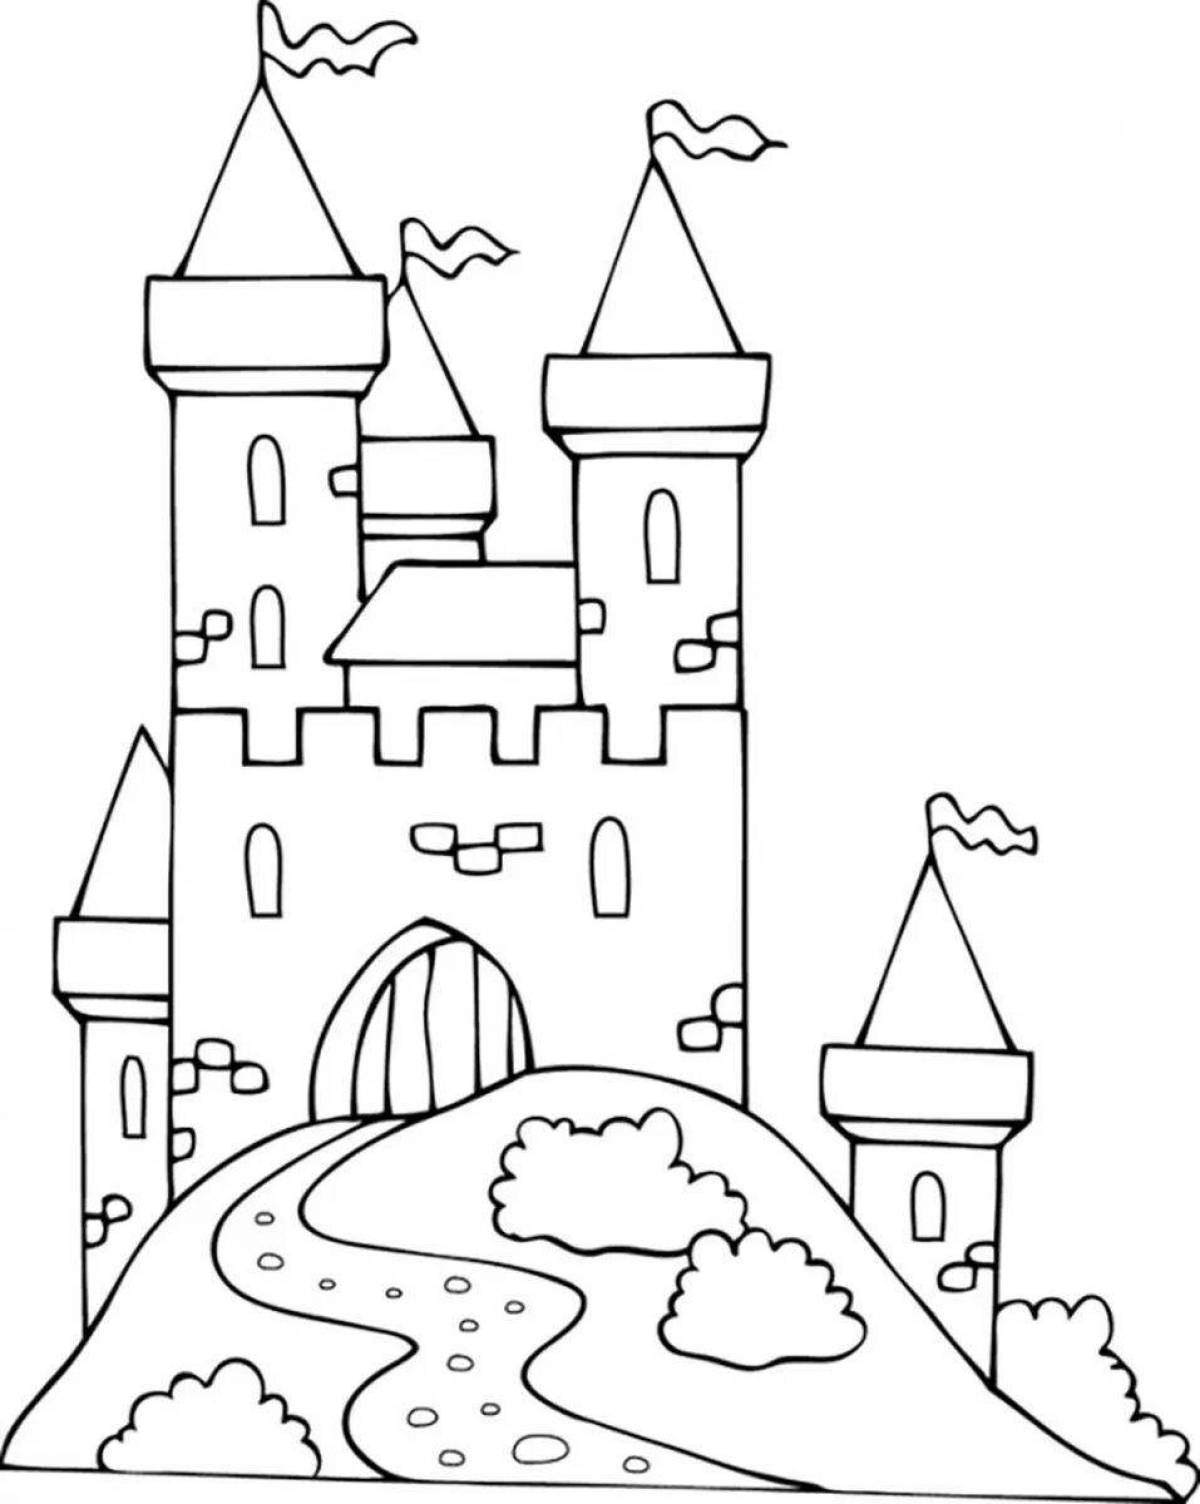 Violent castle coloring pages for kids